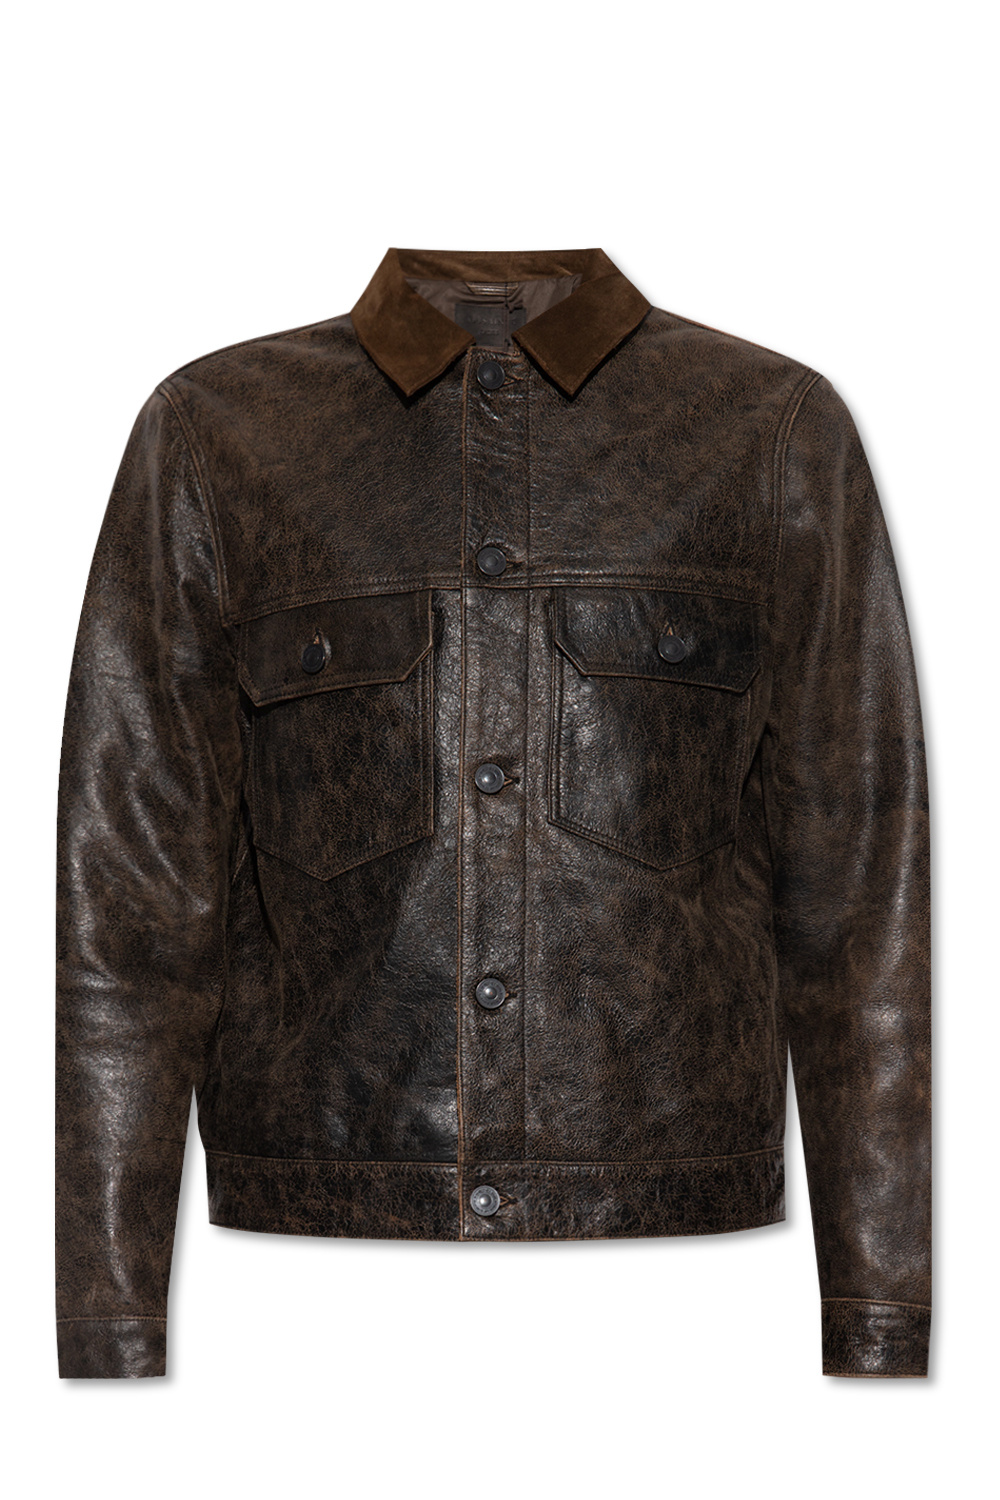 AllSaints ‘Naru’ leather jacket